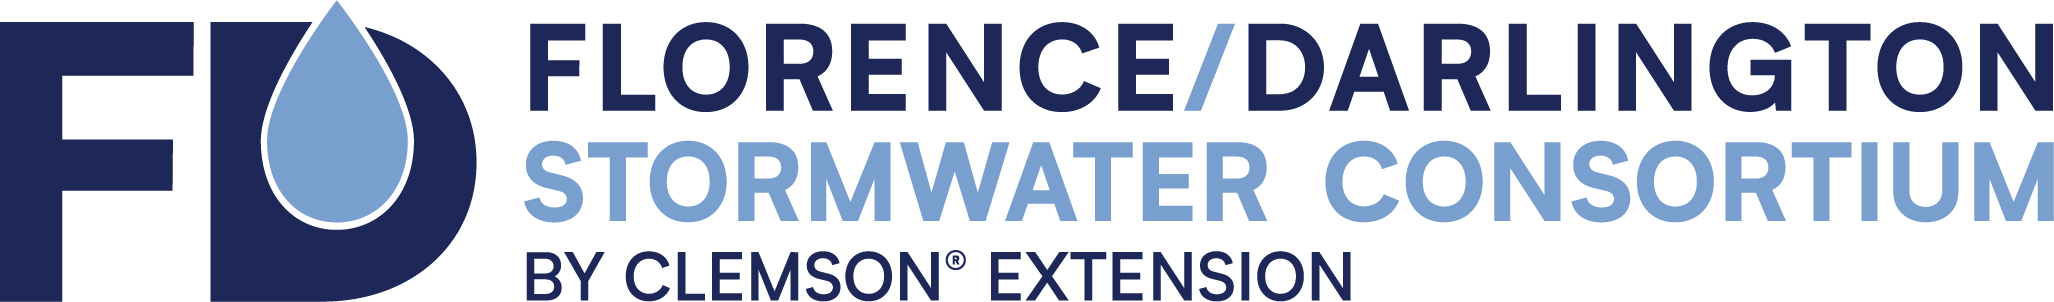 florence darlington stormwater consortium by clemson extension